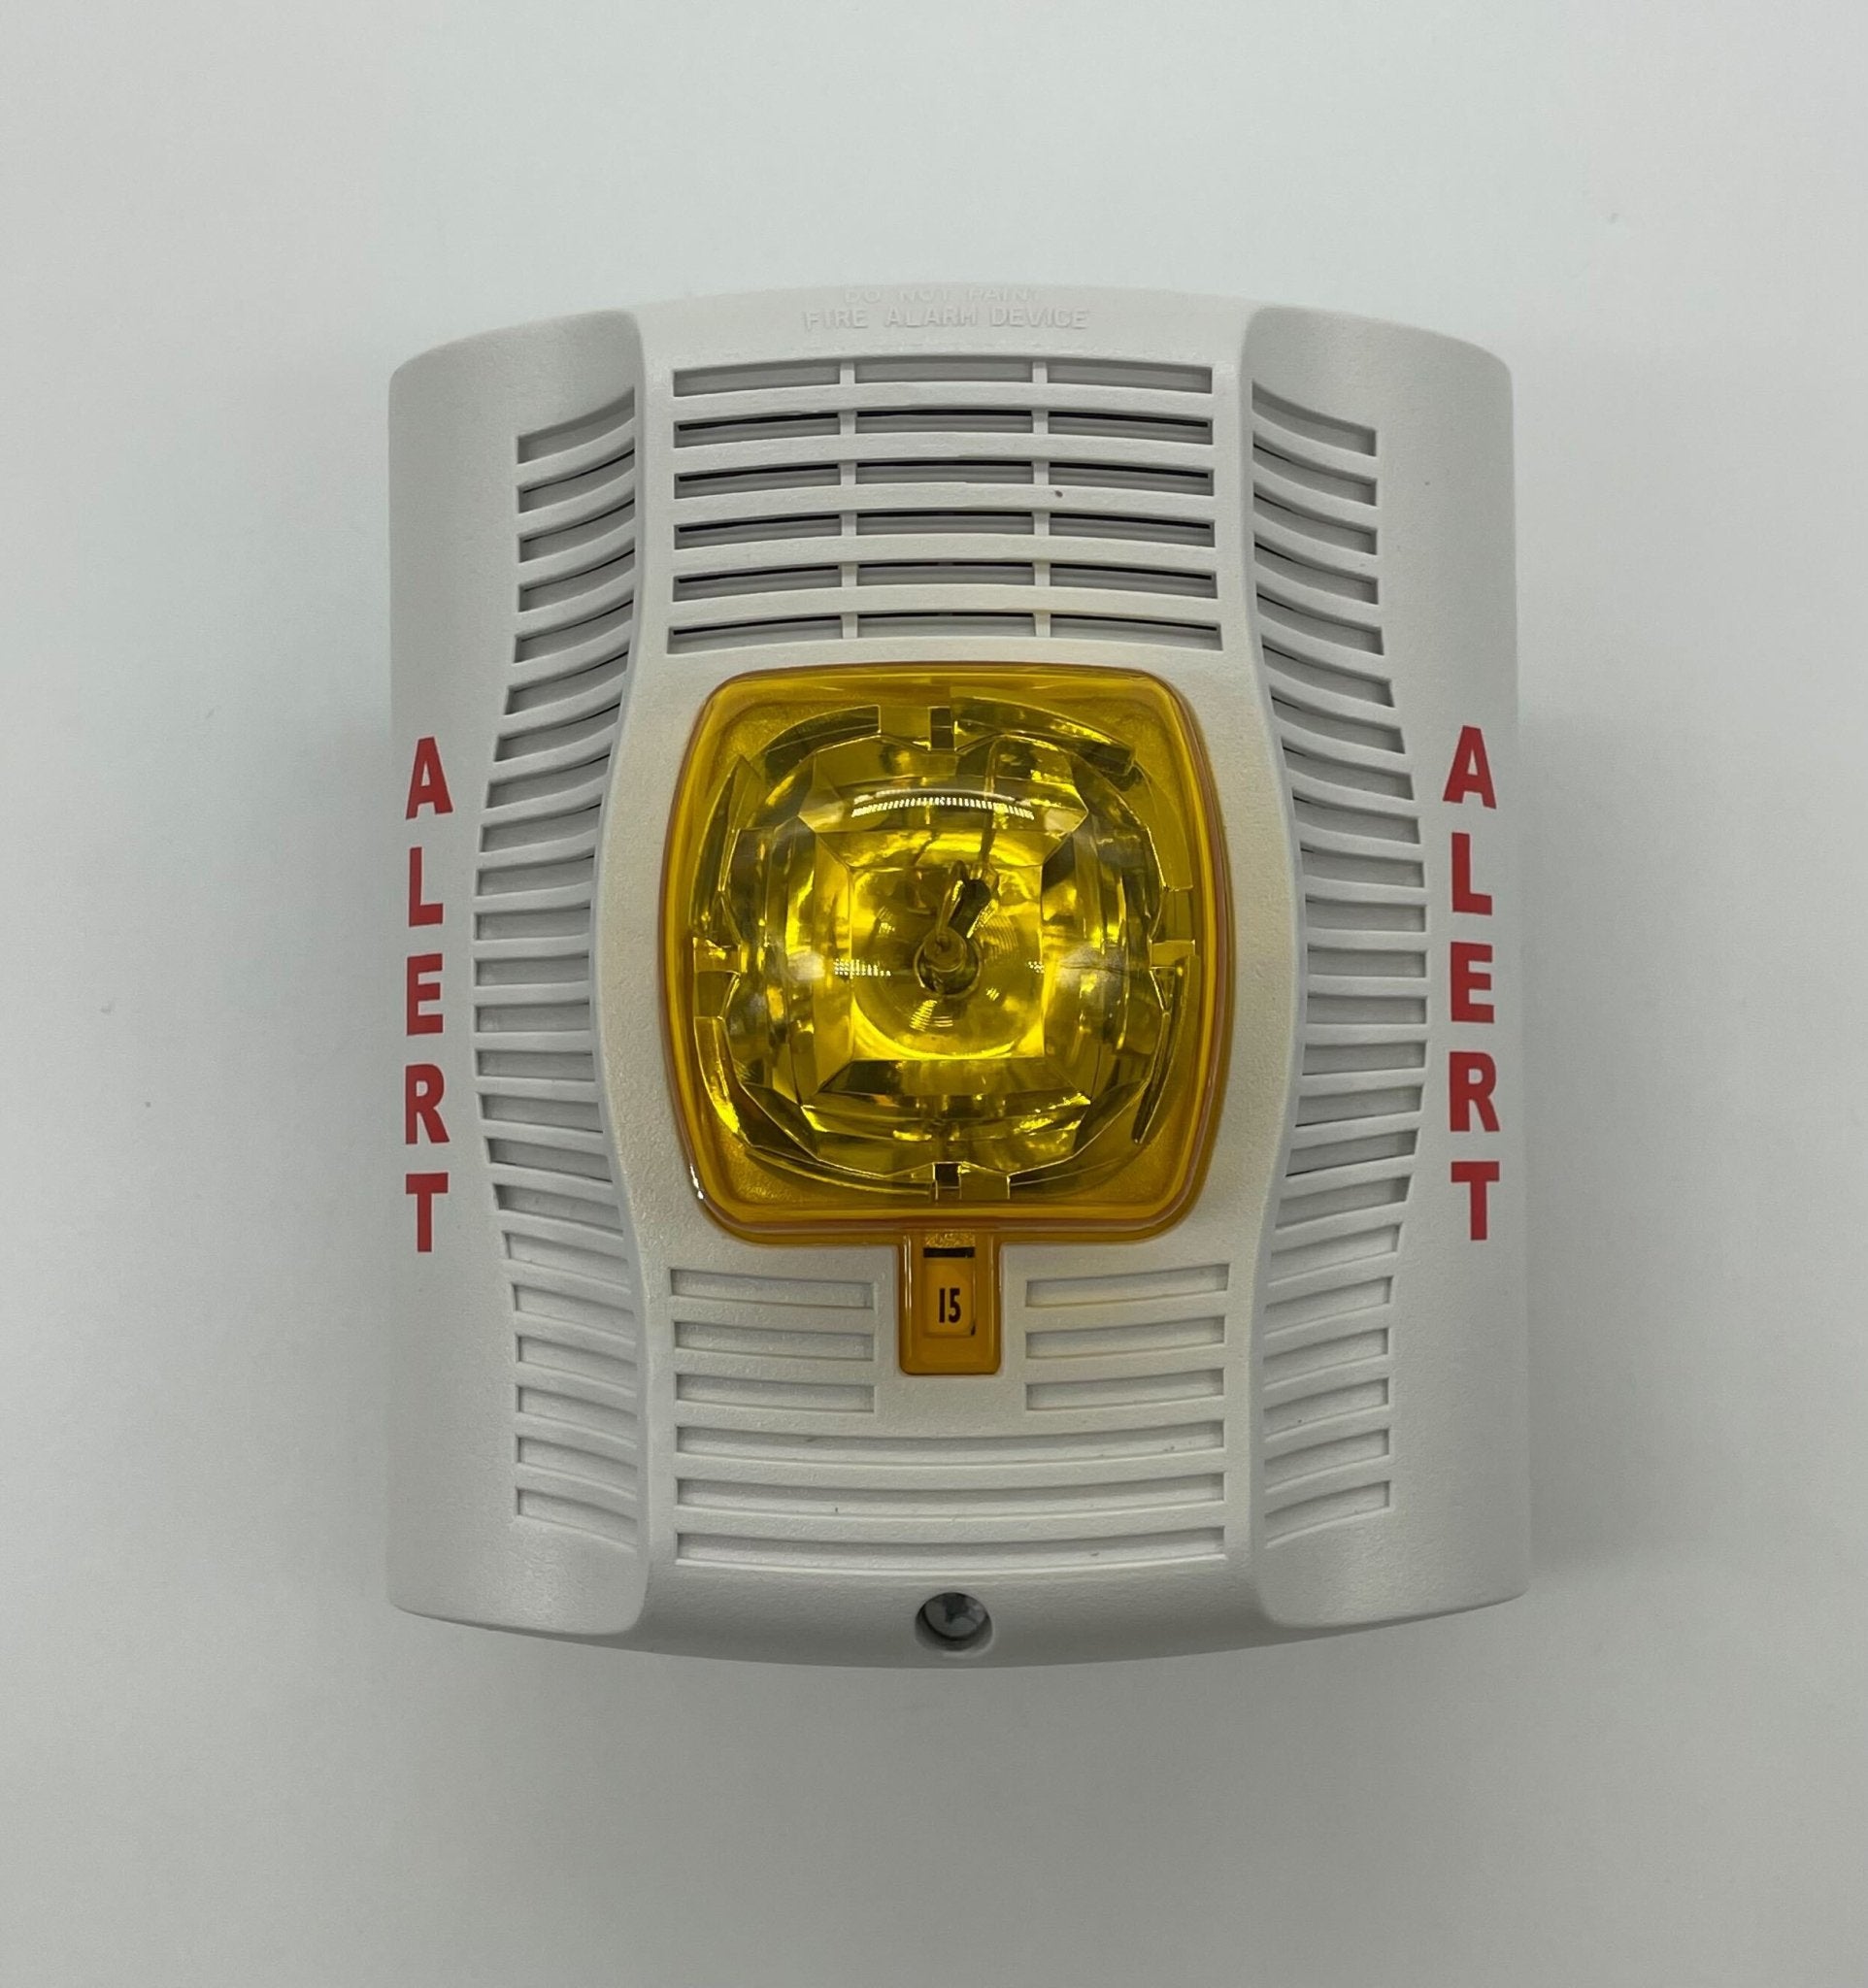 System Sensor SPSW-ALERT - The Fire Alarm Supplier